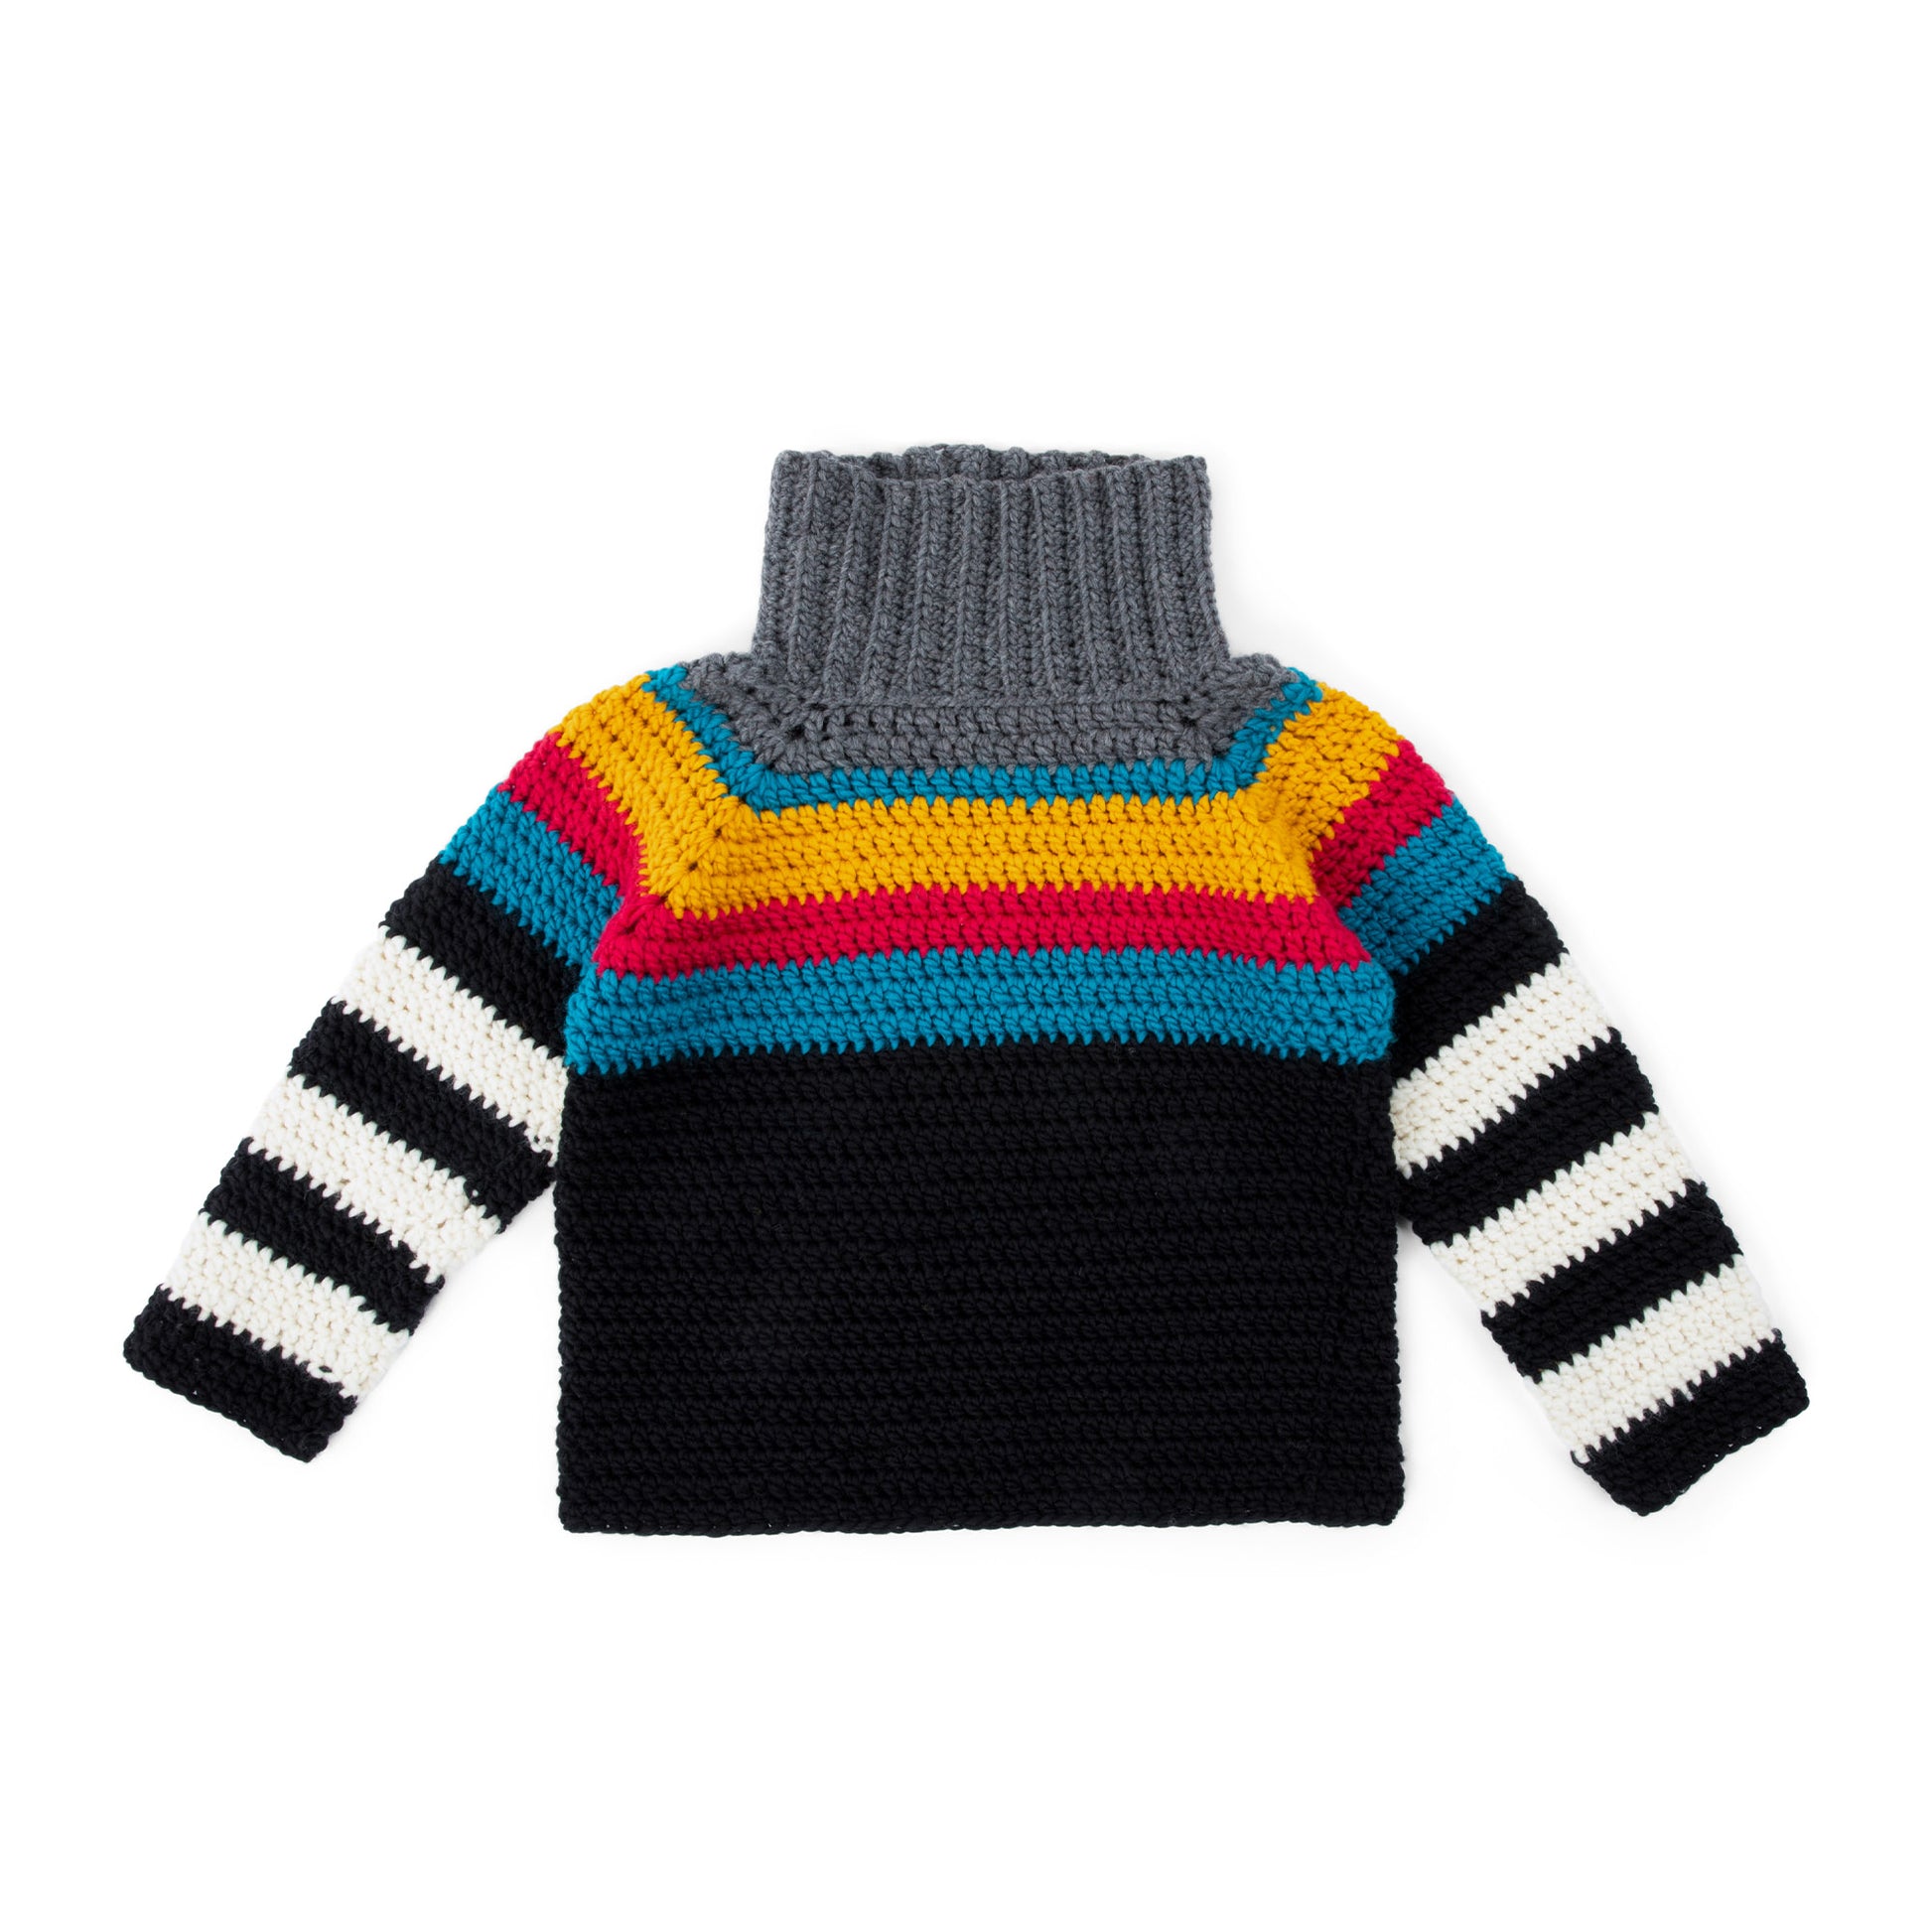 Free Patons Stripe It Bright Crochet Sweater Pattern